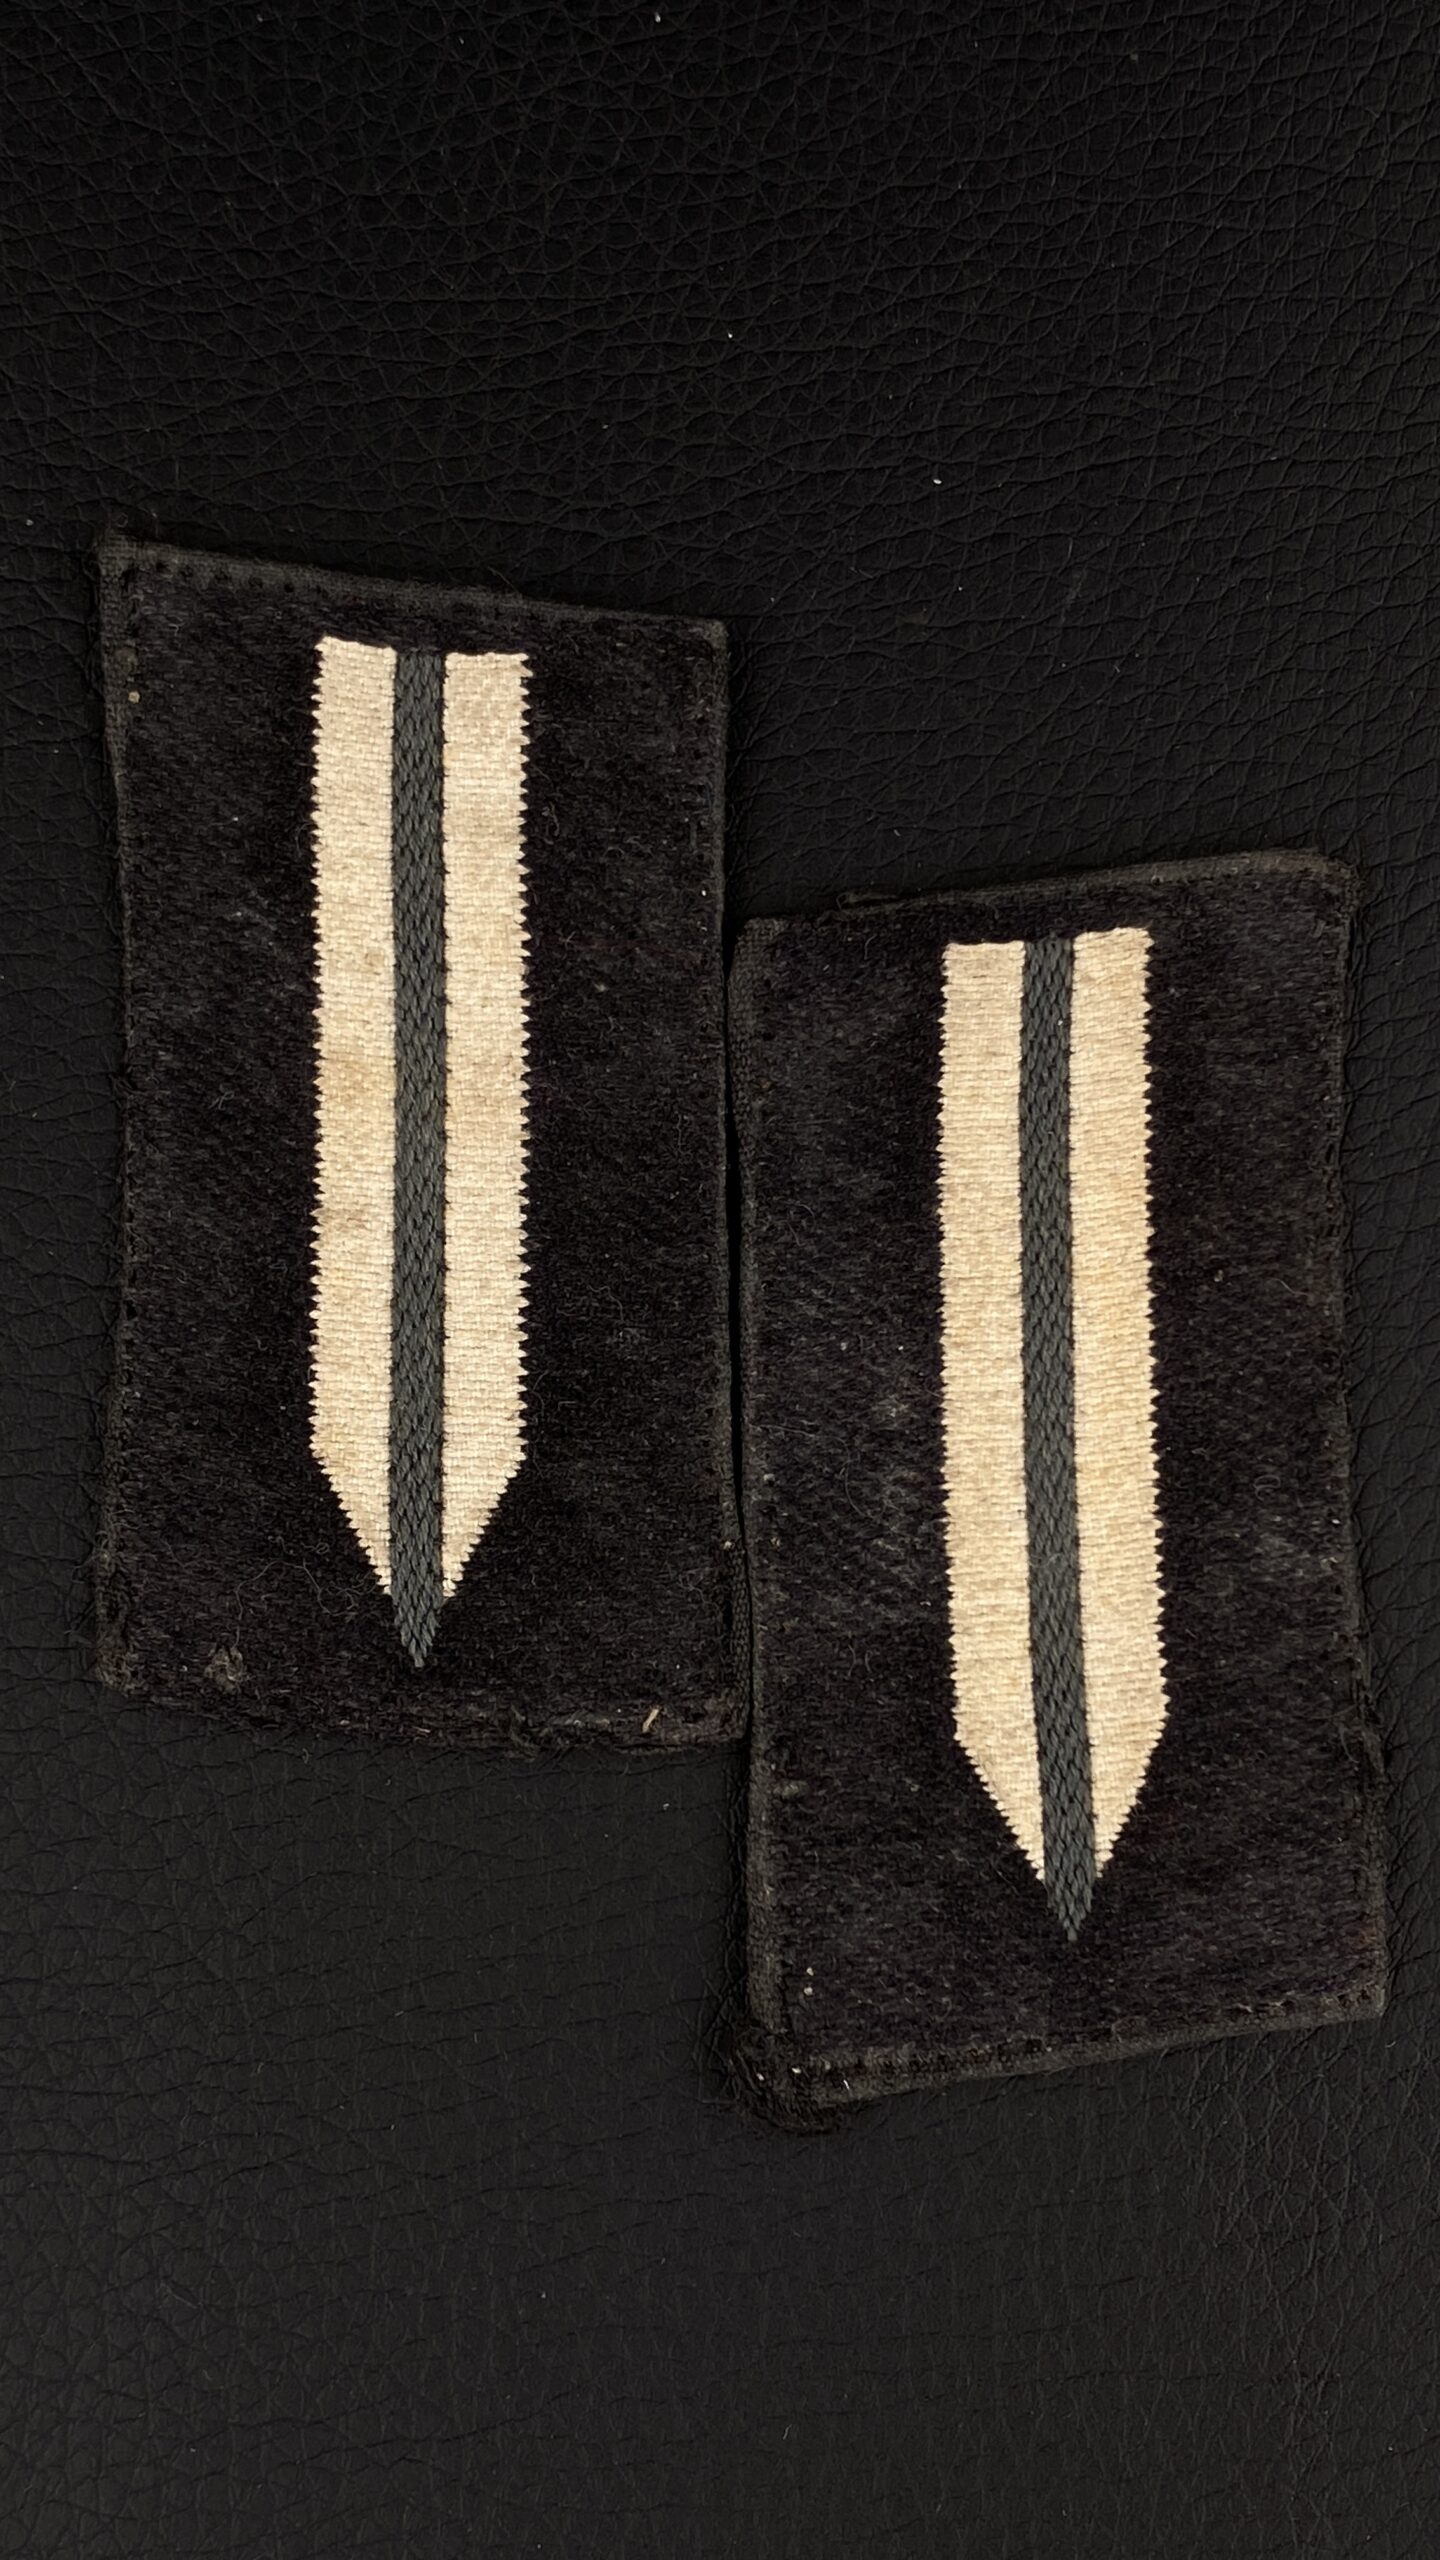 Петлицы форманна (сержант/ефрейтор) RAD образца 1936-42 гг.